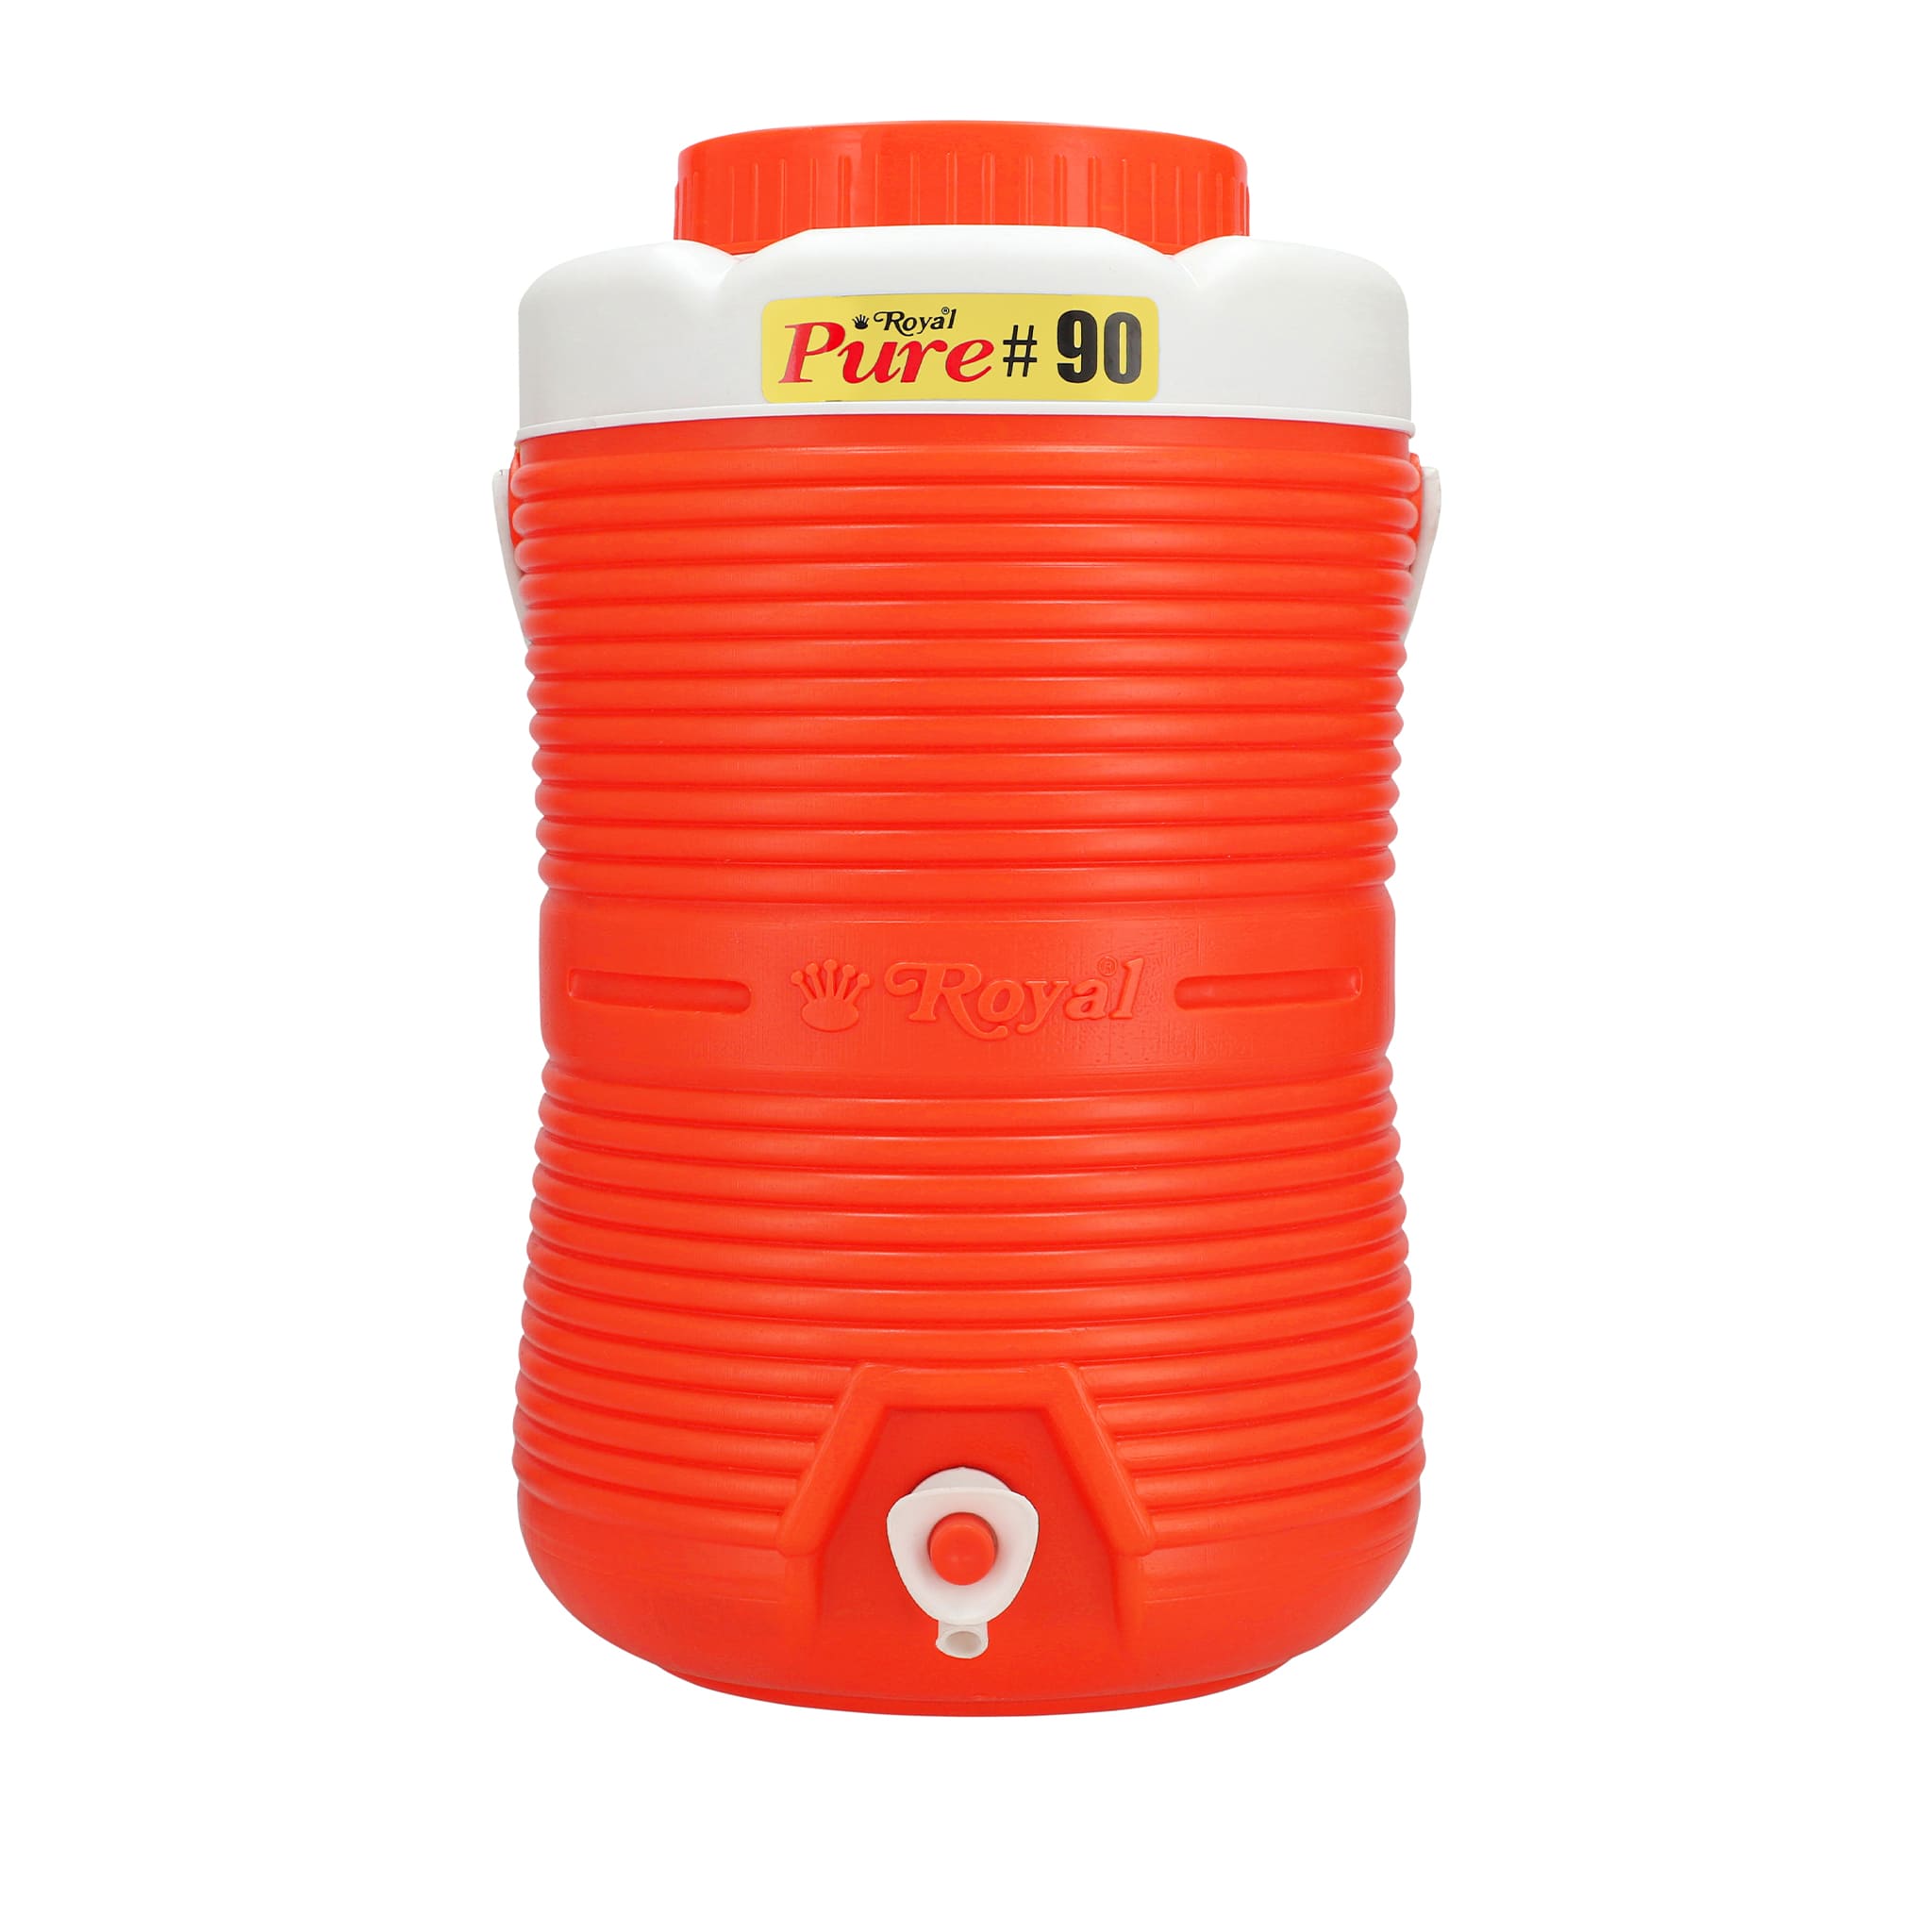 Pure 13 Liter Cooler